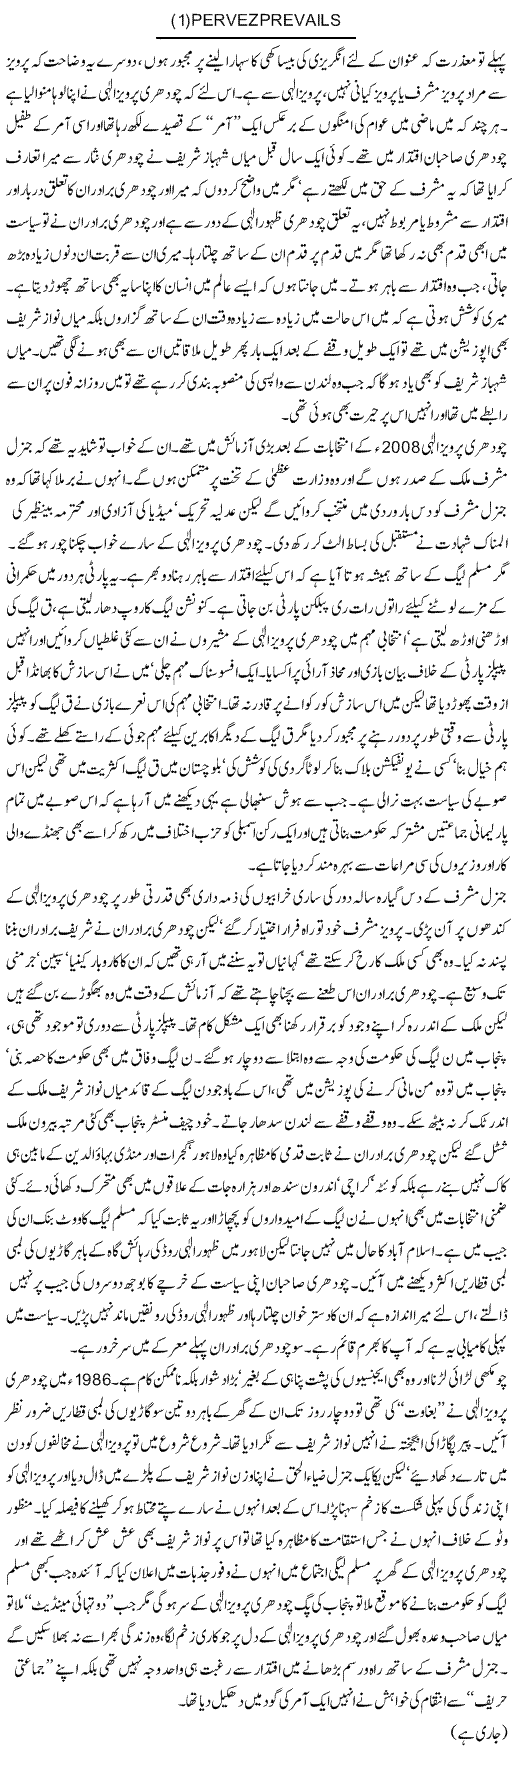 Pervez Prevails Express Column Asadullah Ghalib 16 March 2011